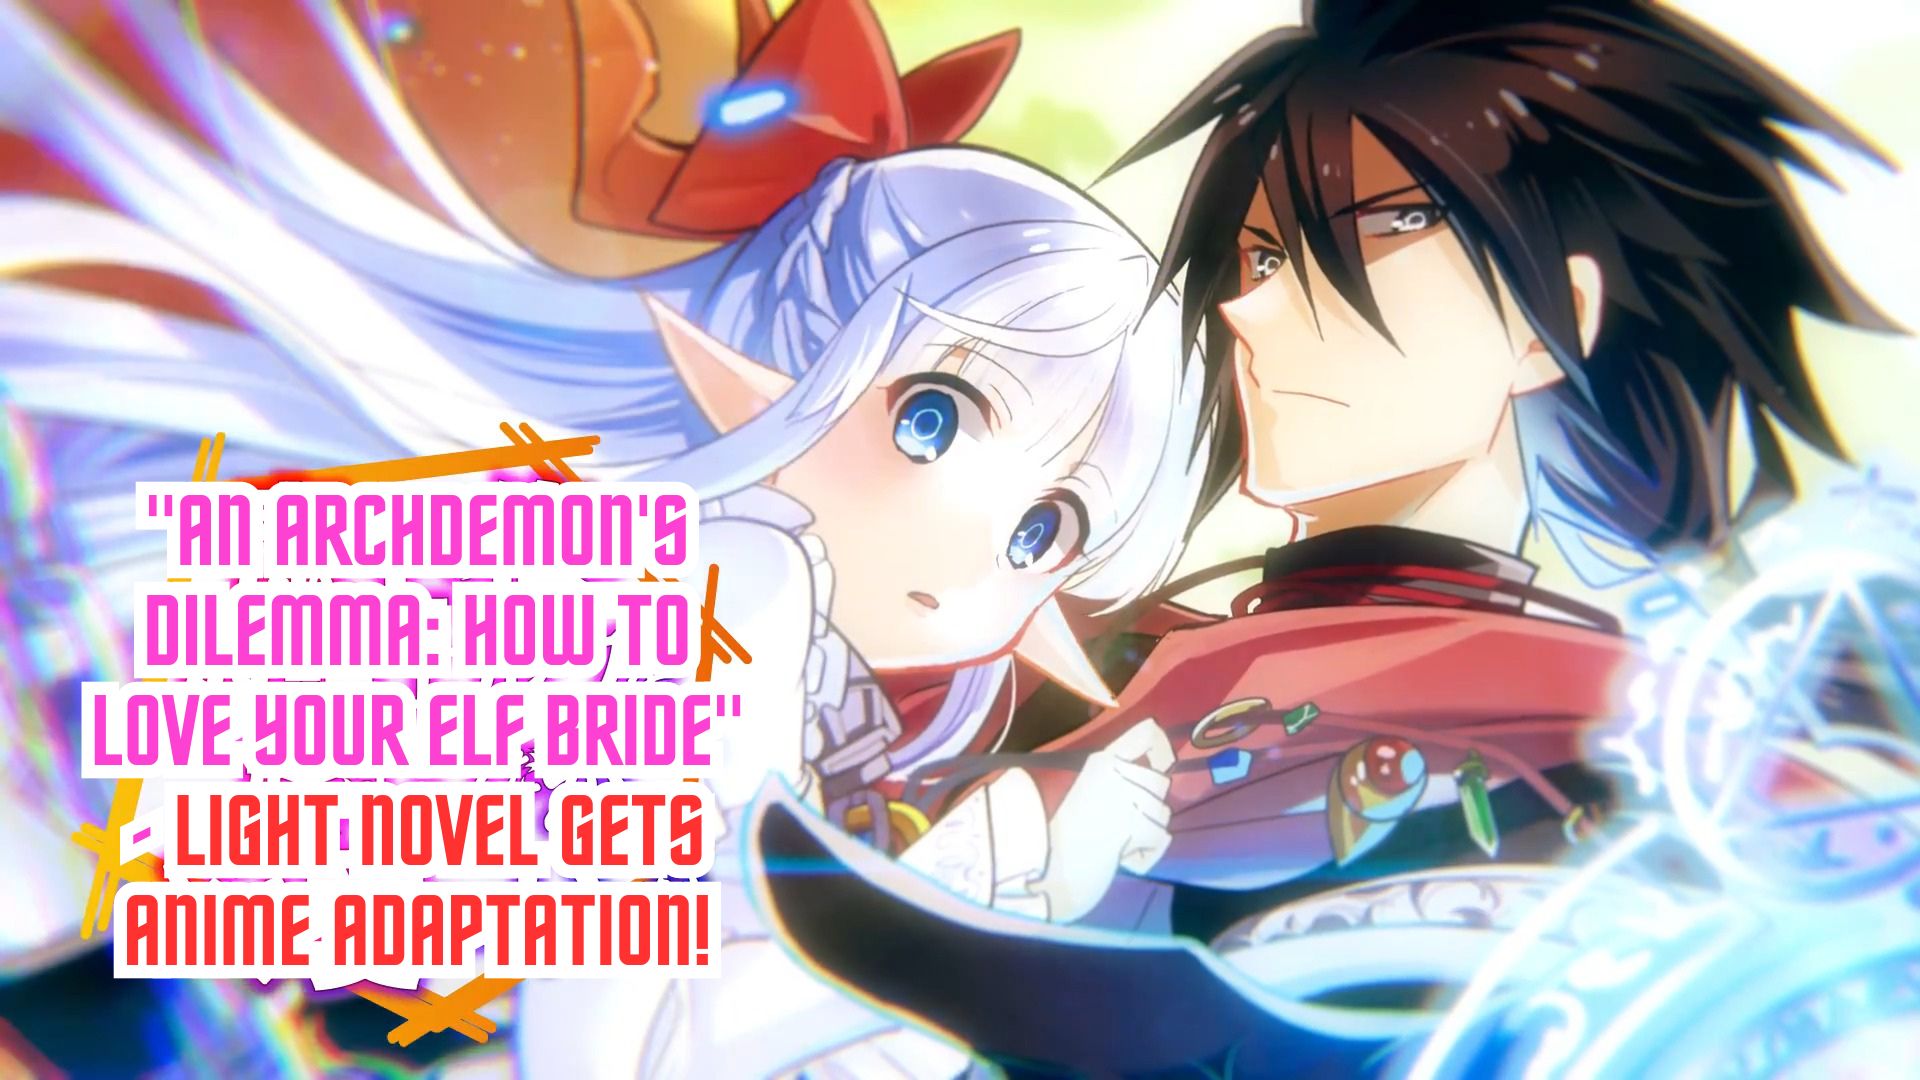 An Archdemon's Dilemma How to Love Your Elf Bride - Light Novel Gets Anime Adaptation!